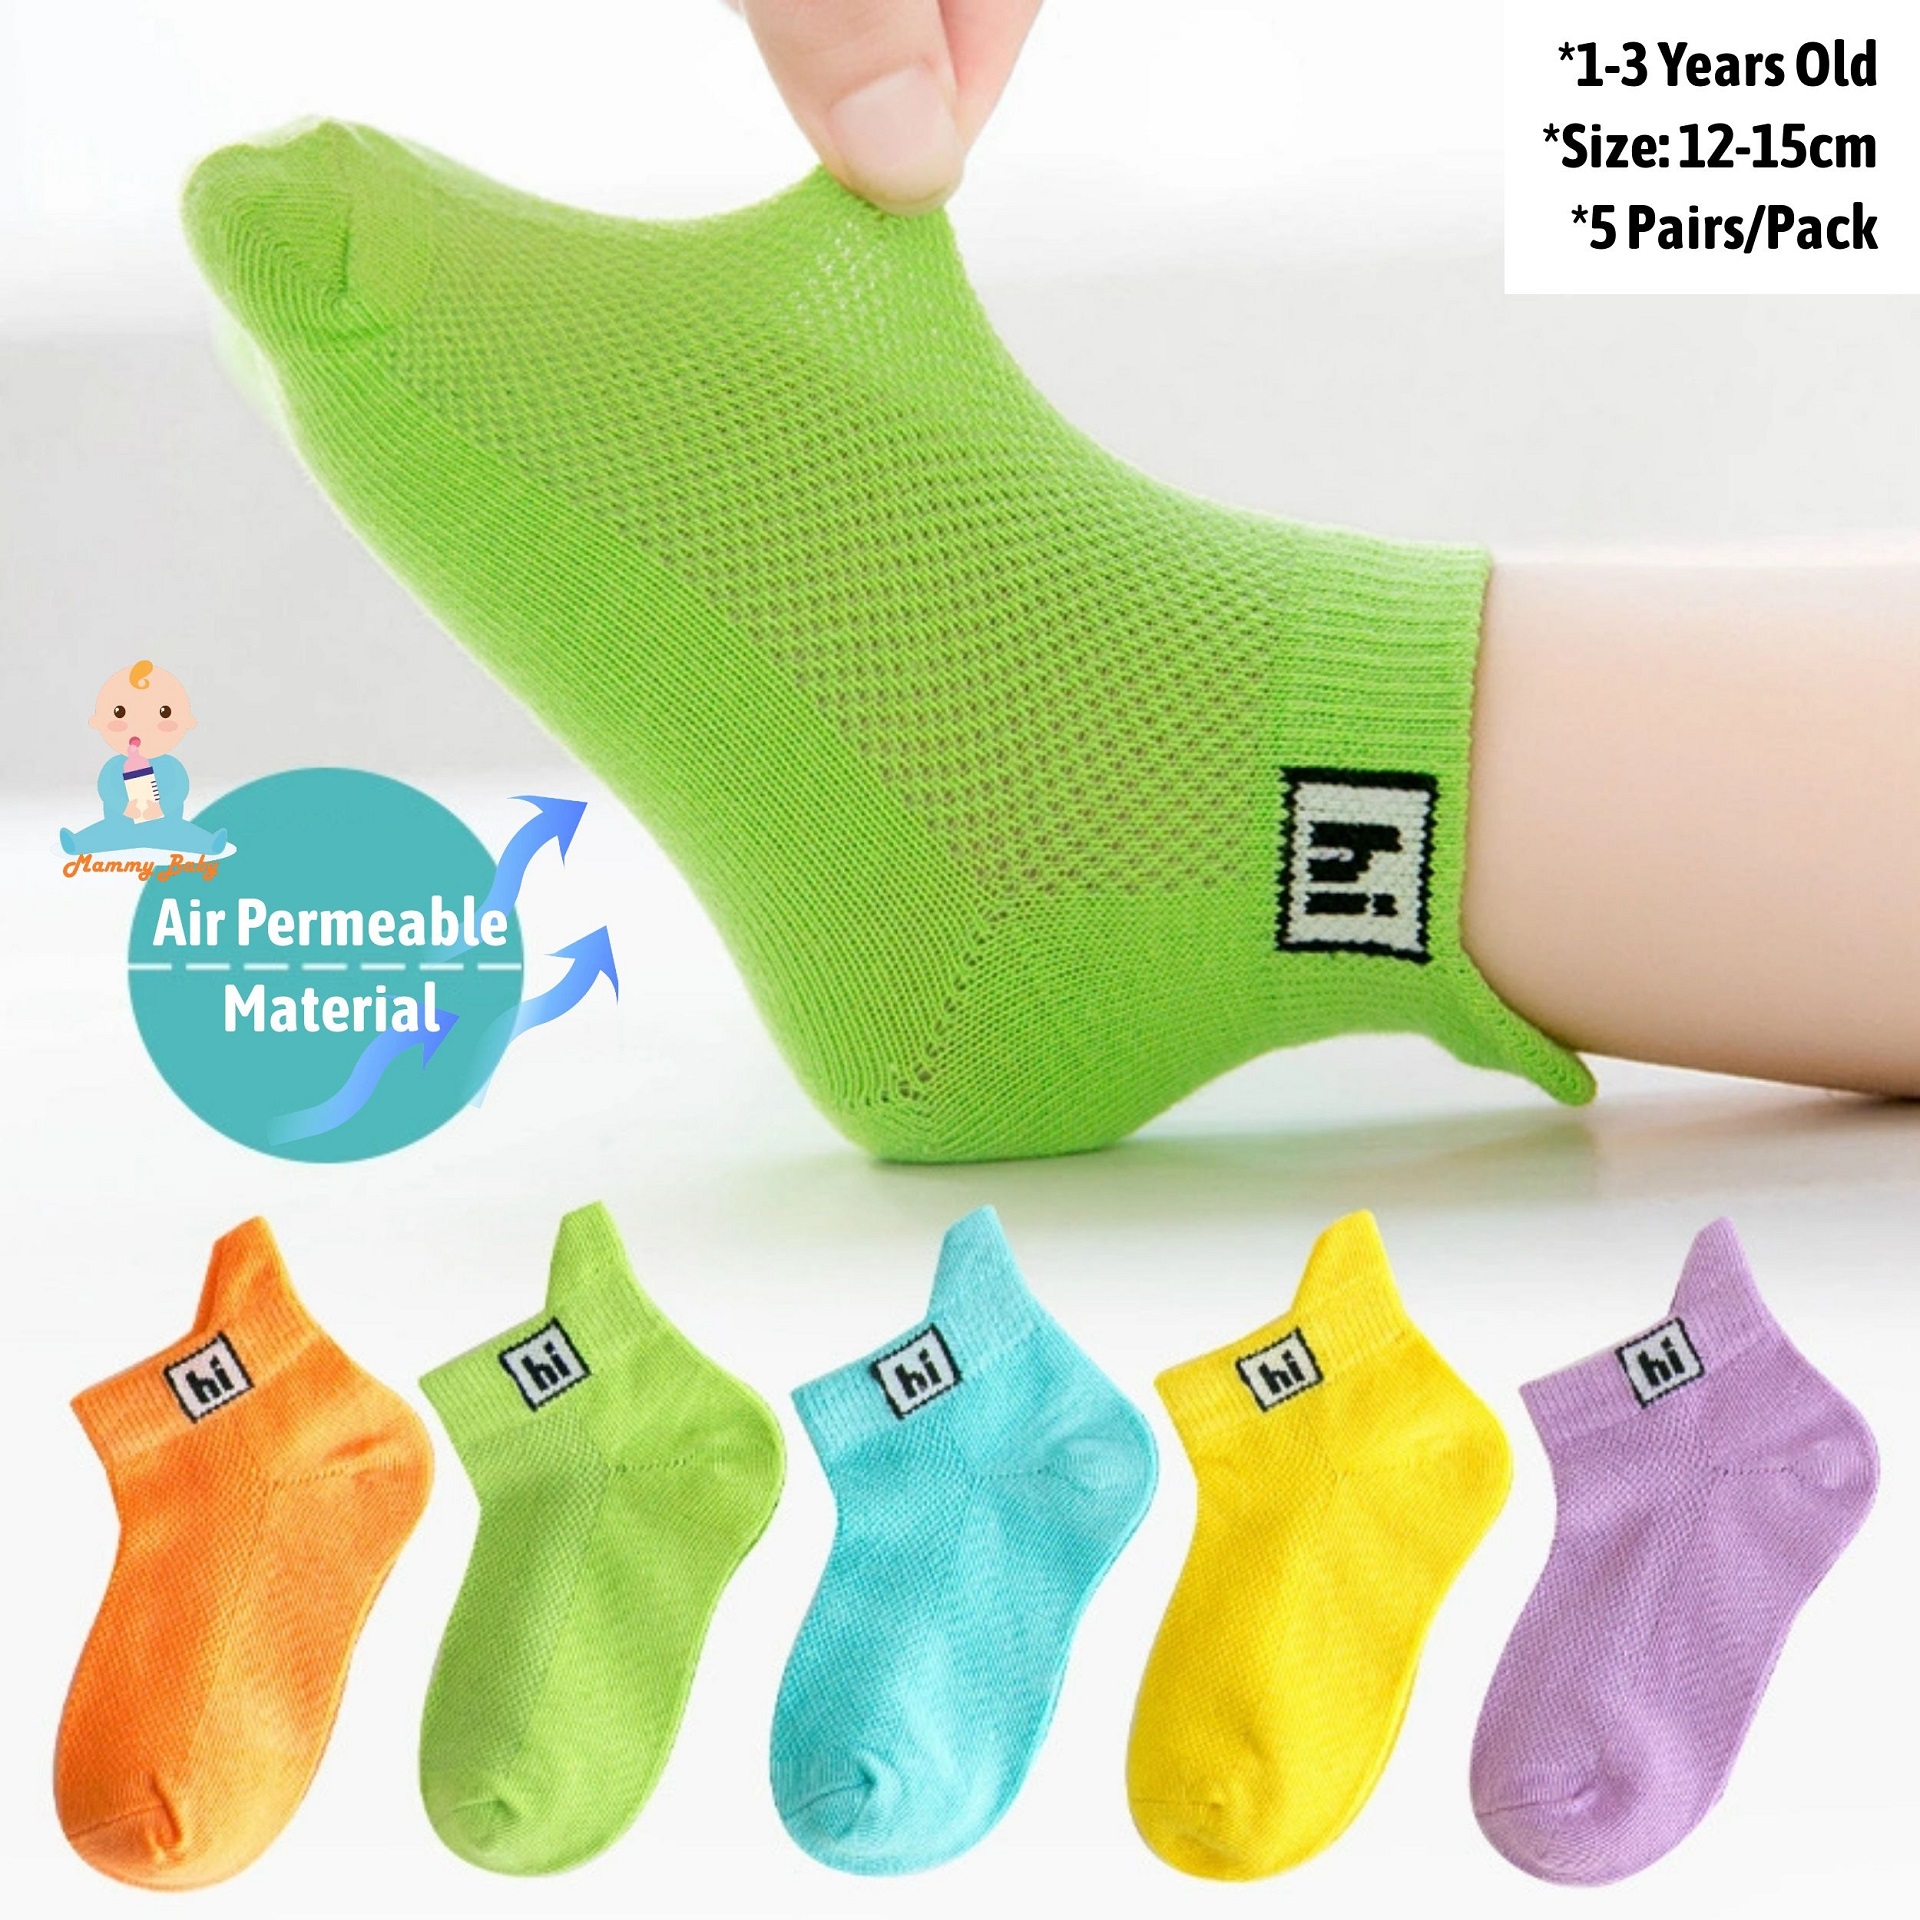 MAMMY BABY Boys & Girls Multi-Color Design  Size-S (1-3ขวบ) ความยาว  S12-15cm ถุงเท้าเด็ก ถุงเท้าแฟชั่นถุงเท้า style เกาหลี 1เซต5คู่5สี (5 pair/pack )ระบายอากาศได้ดี ใส่สบาย